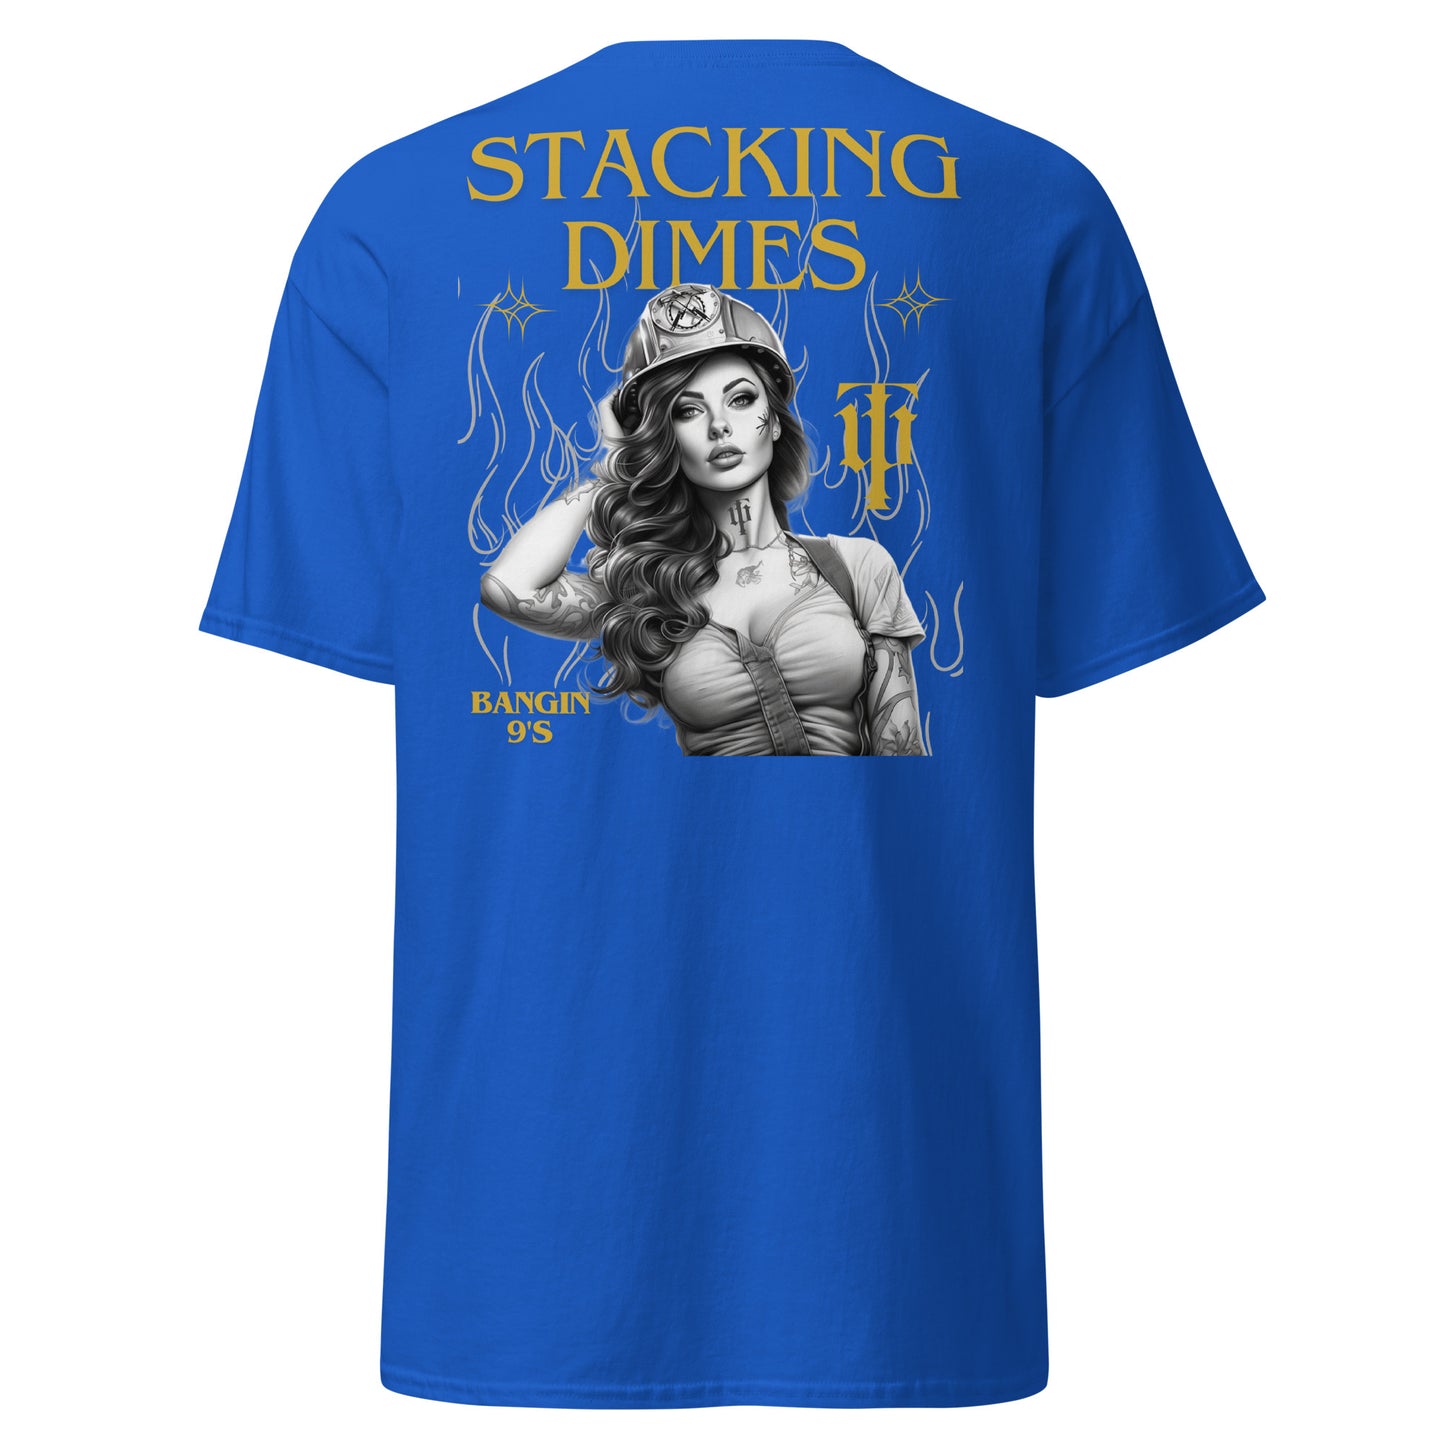 Stacking Dimes T-shirt